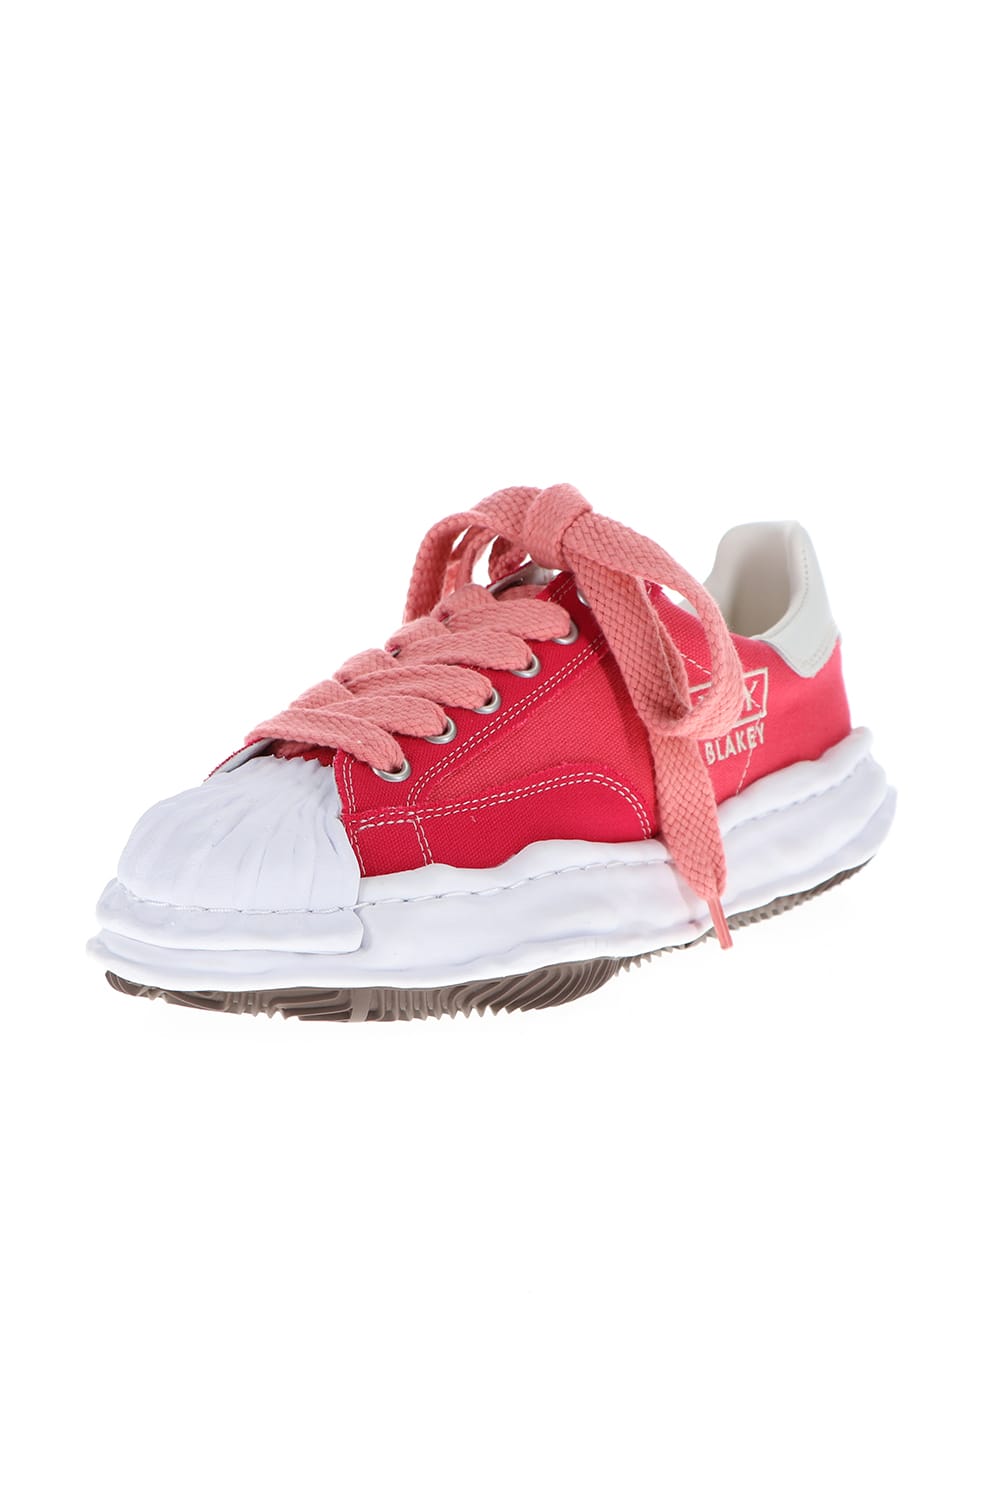 -BLAKEY Low- Original sole canvas Low-Top sneakers Pink